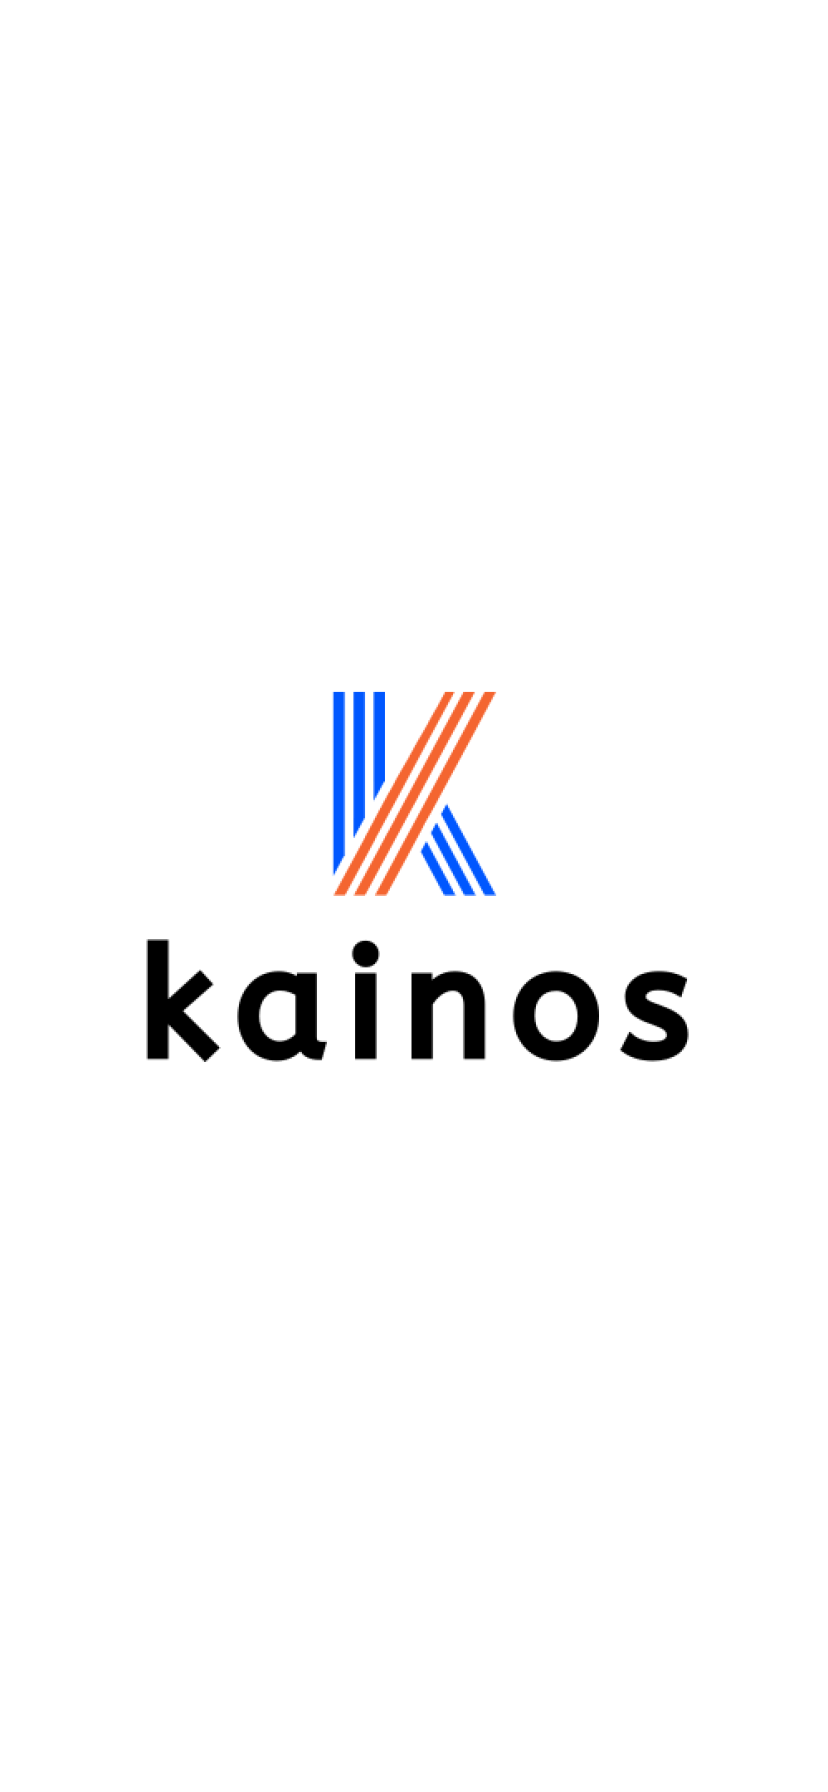 Kainos.co Domain Name For Sale